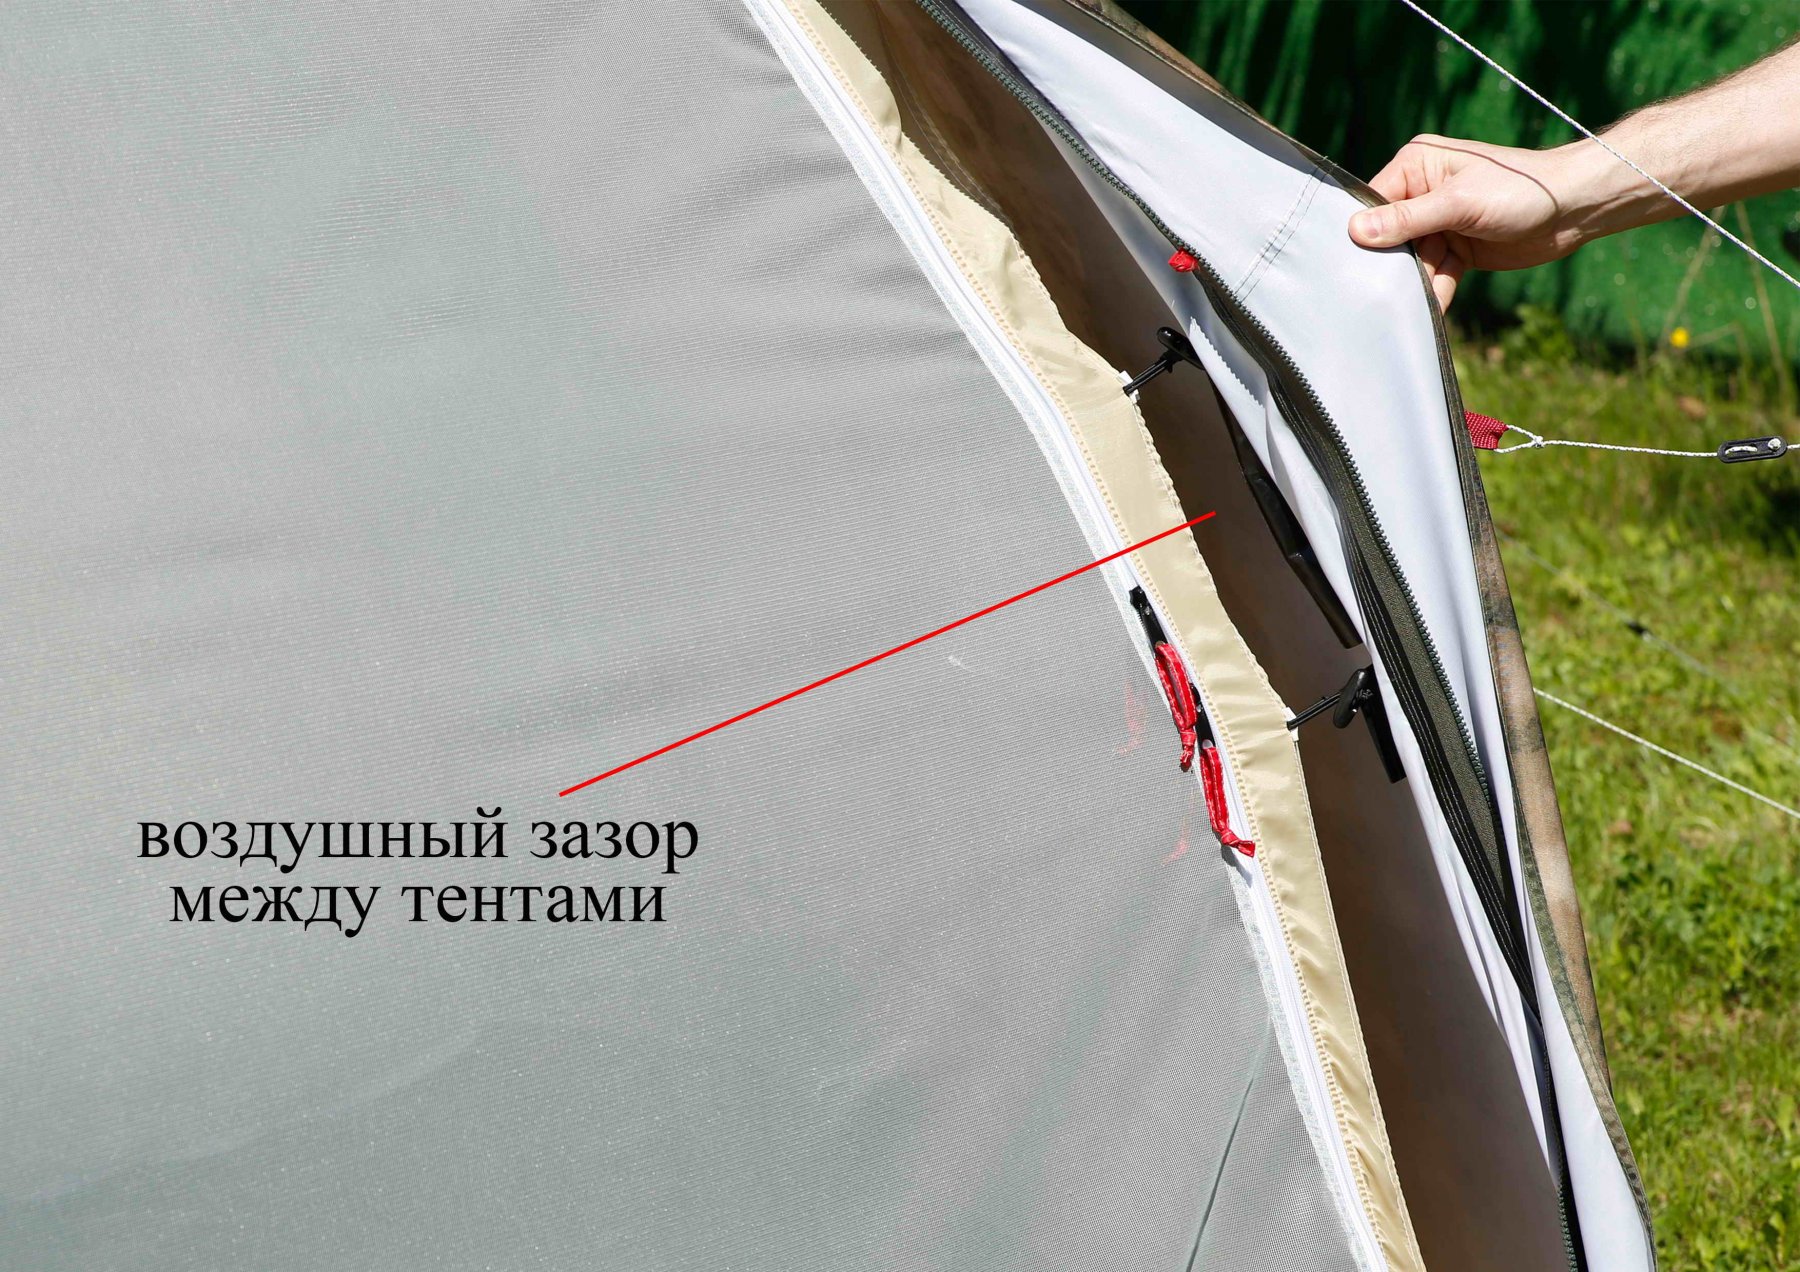 двухслойная палатка